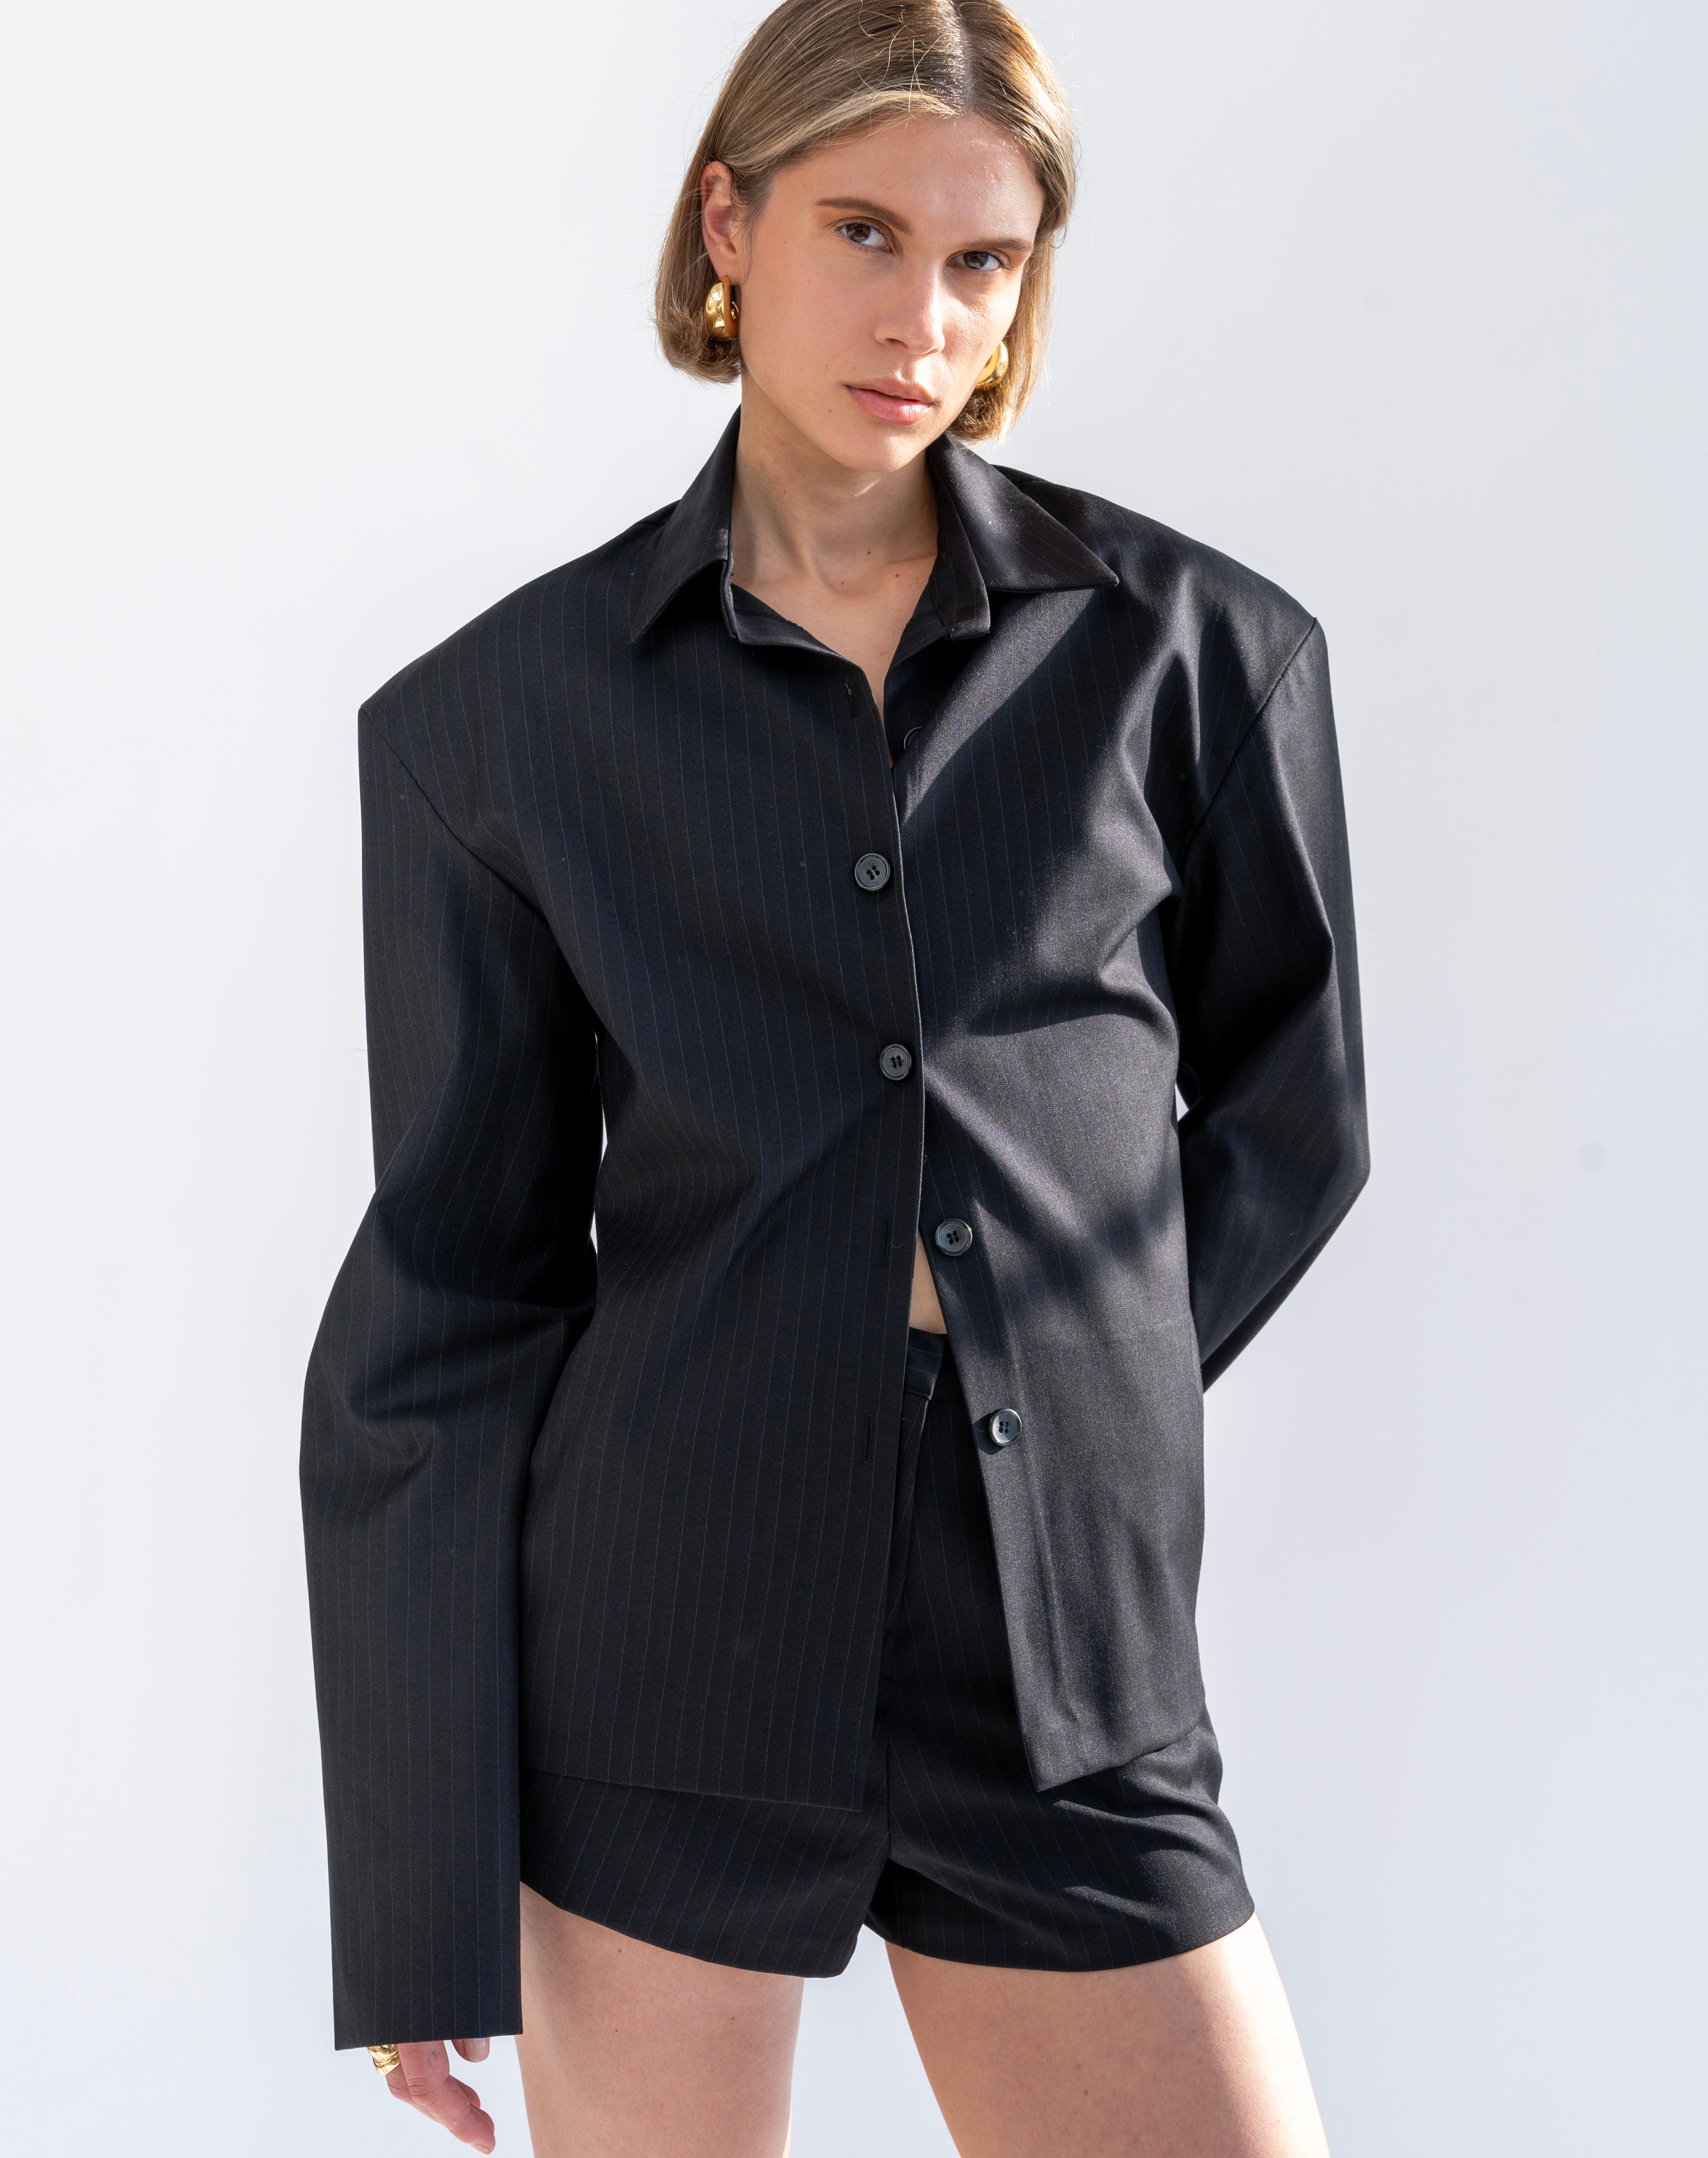 Hazel Pin Striped Shirt And Short Set, Black - Pre Order